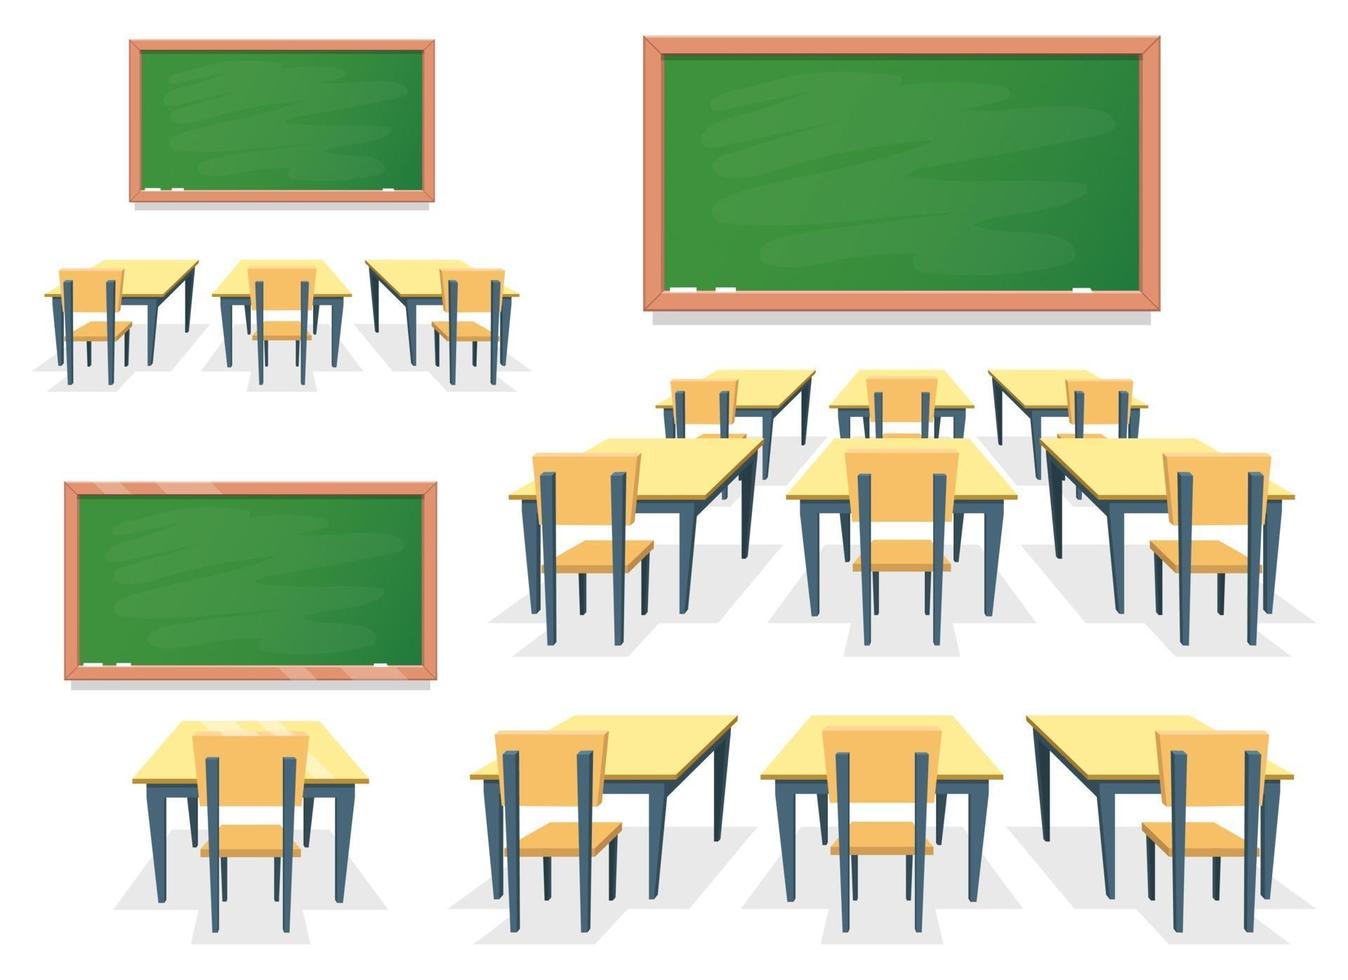 Classroom vector design illustration set isolated on white background